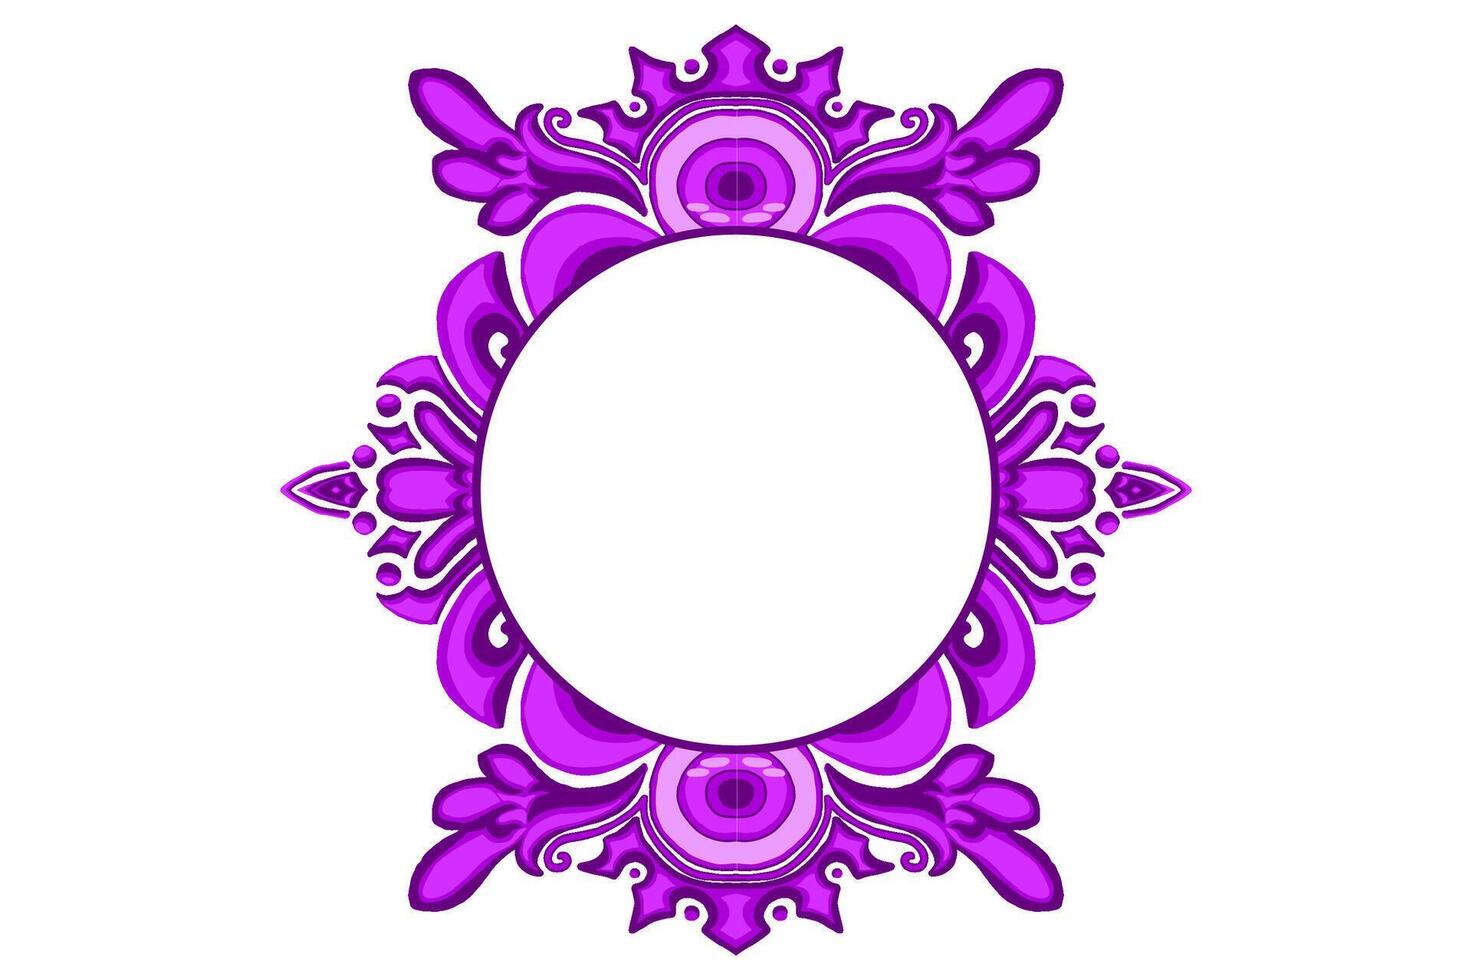 Purple Eye Ball Angel Ornament Frame Border vector